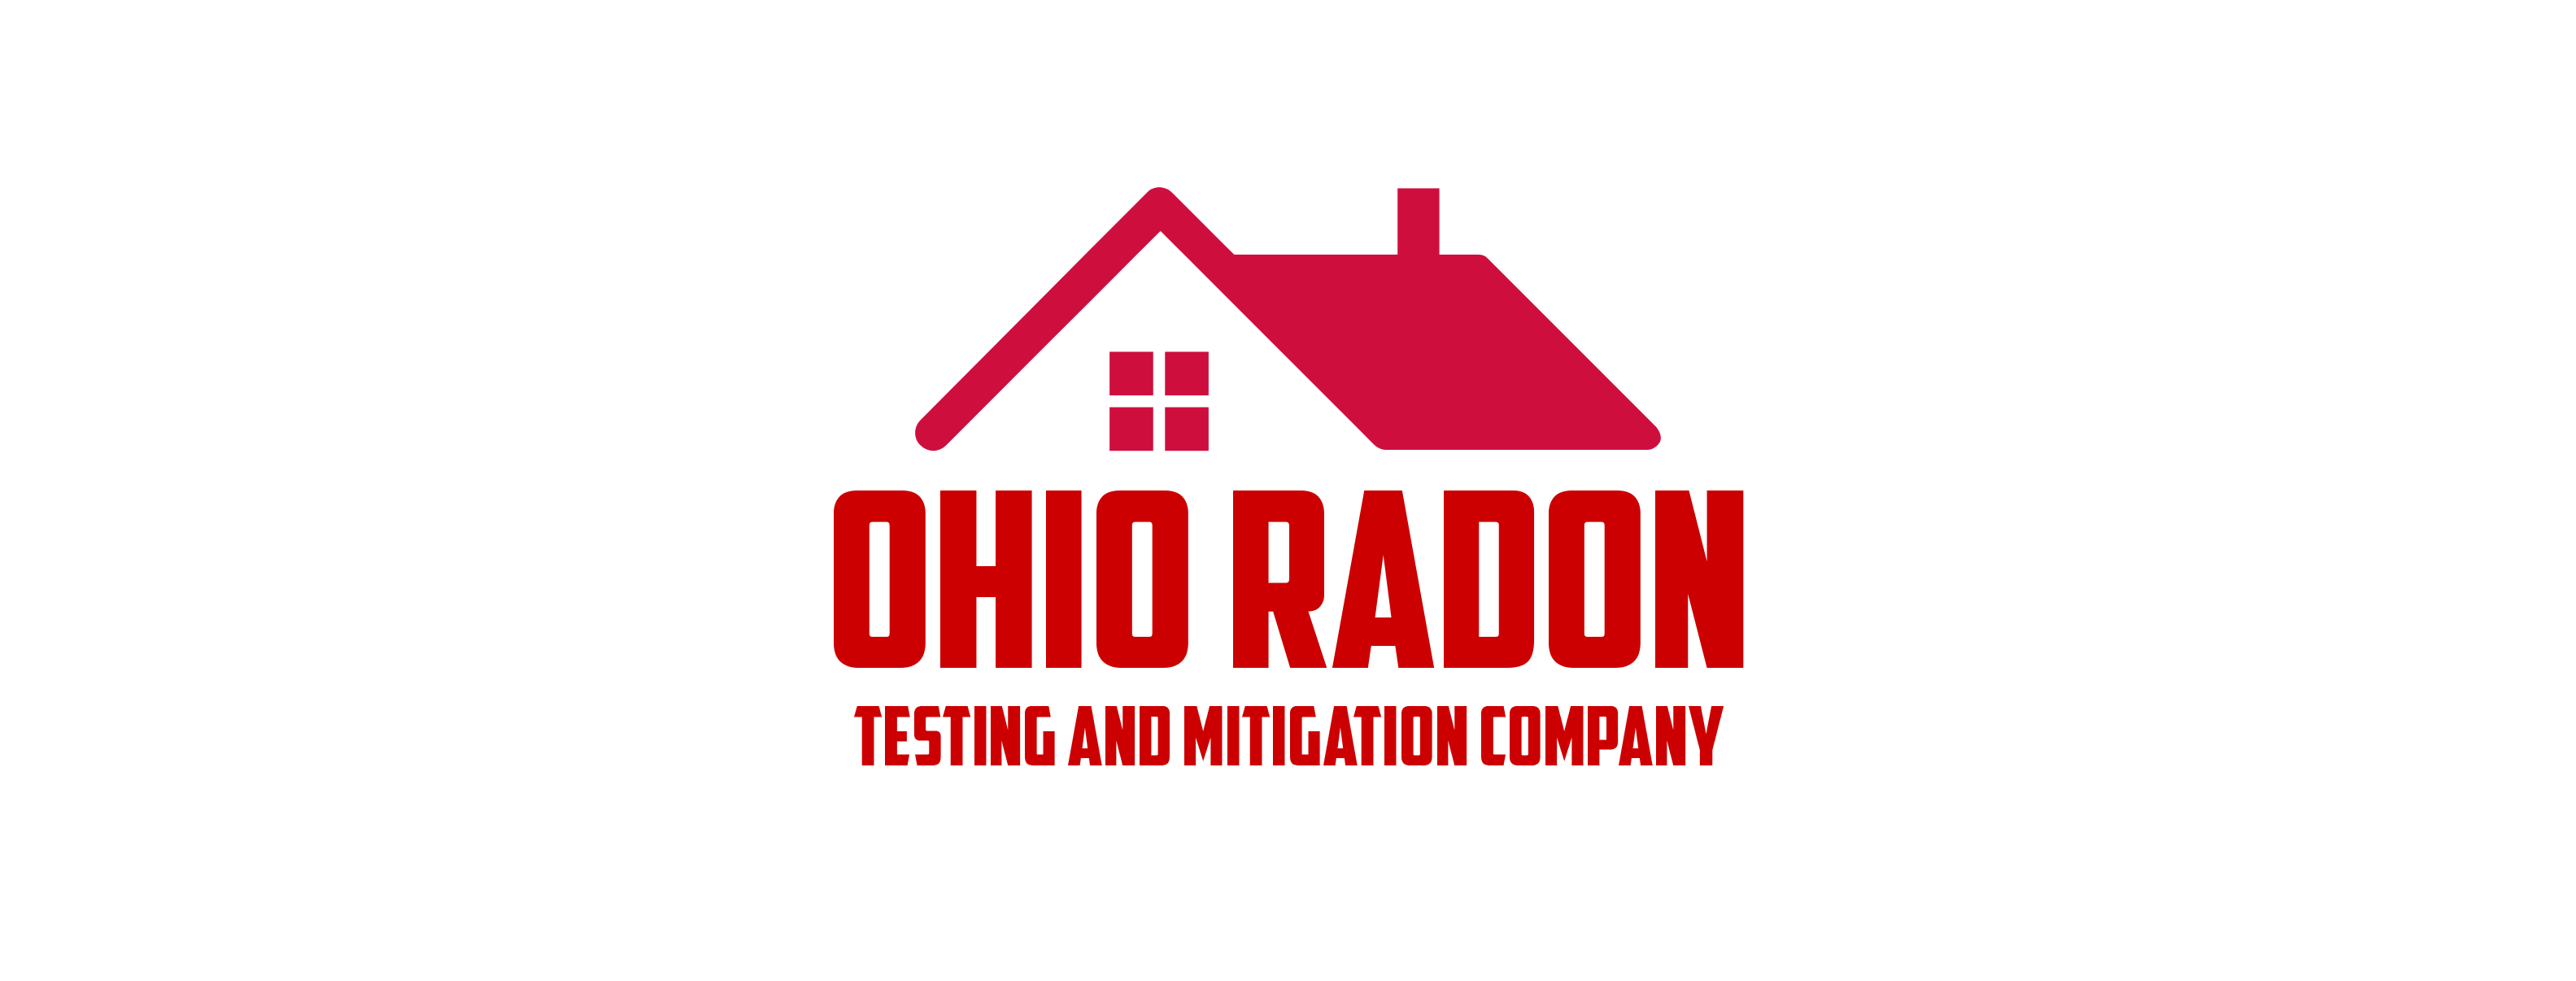 Ohio Radon Testing and Mitigating Company Logo